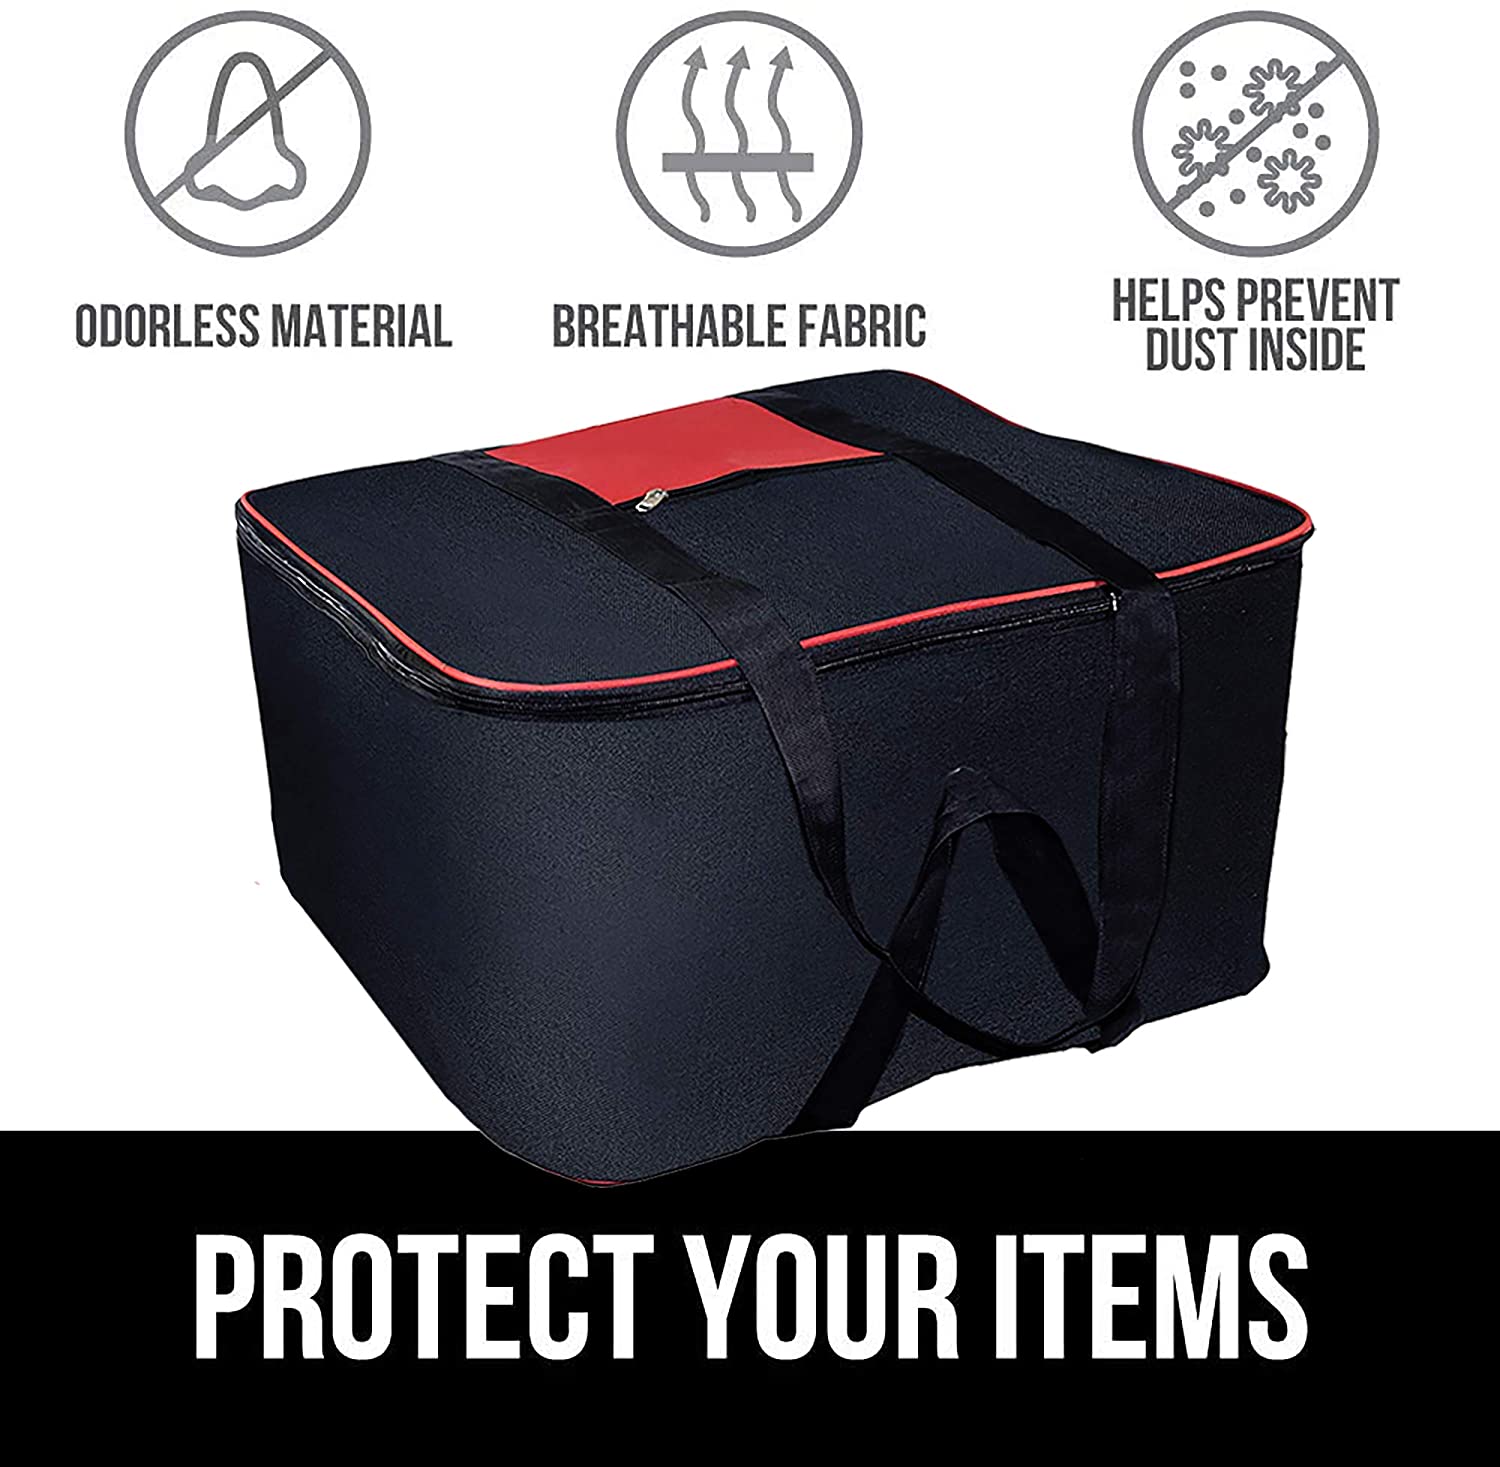 Smart Storage Bag (Pack of 2)